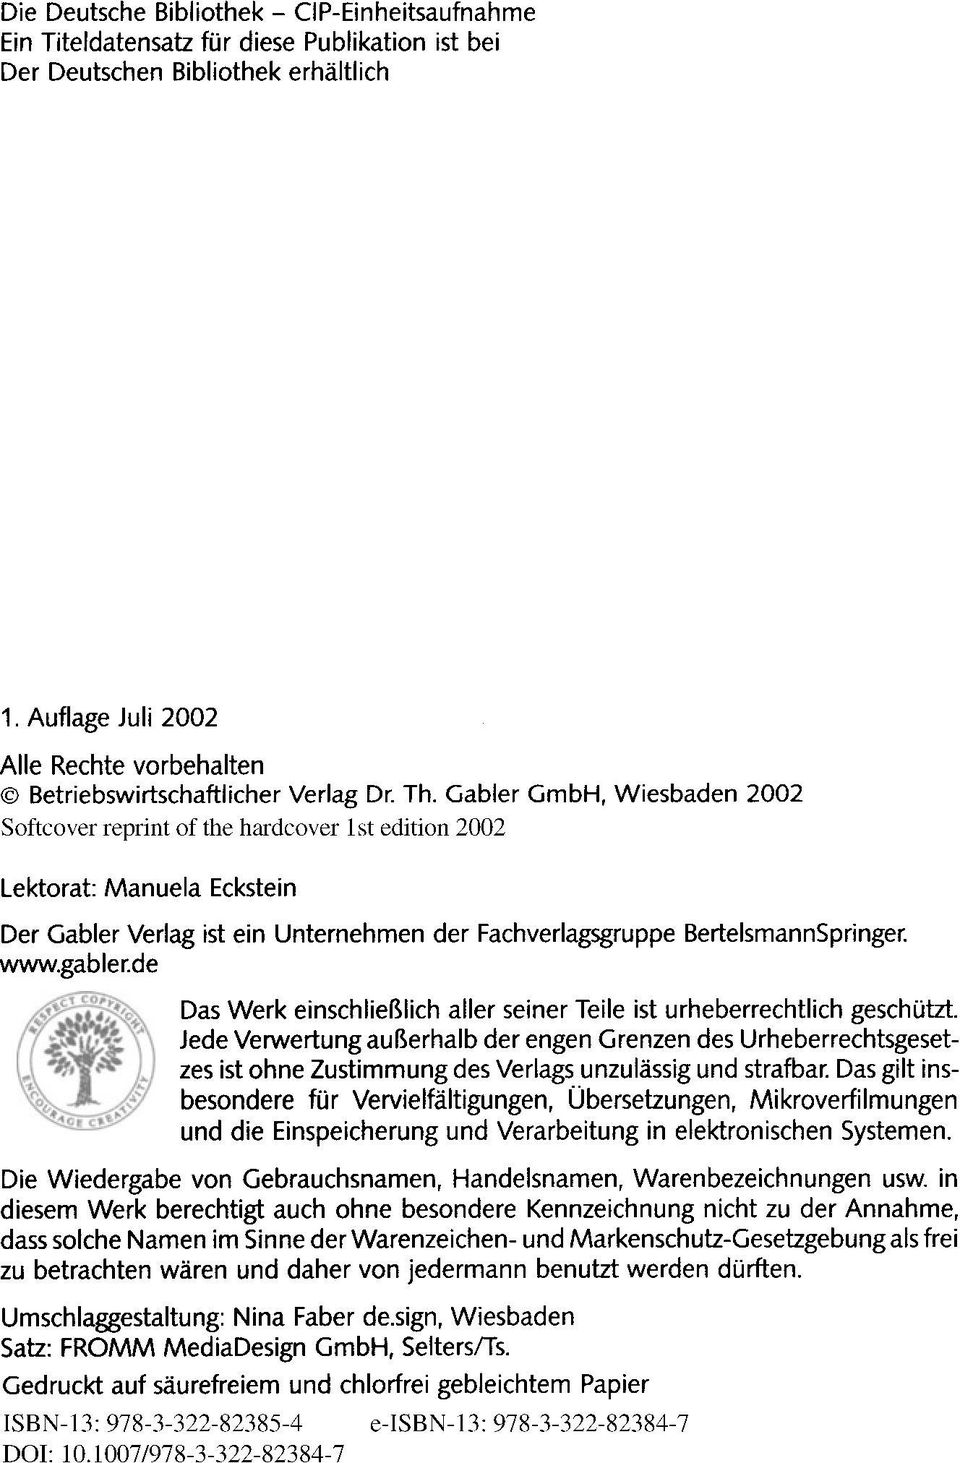 Gabler GmbH, Wiesbaden 2002 Softcover reprint of the hardcover 1st edition 2002 Lektorat: Manuela Eckstein Der Gabler Verlag ist ein Unternehmen der Fachverlagsgruppe BertelsmannSpringer. www.gabler.